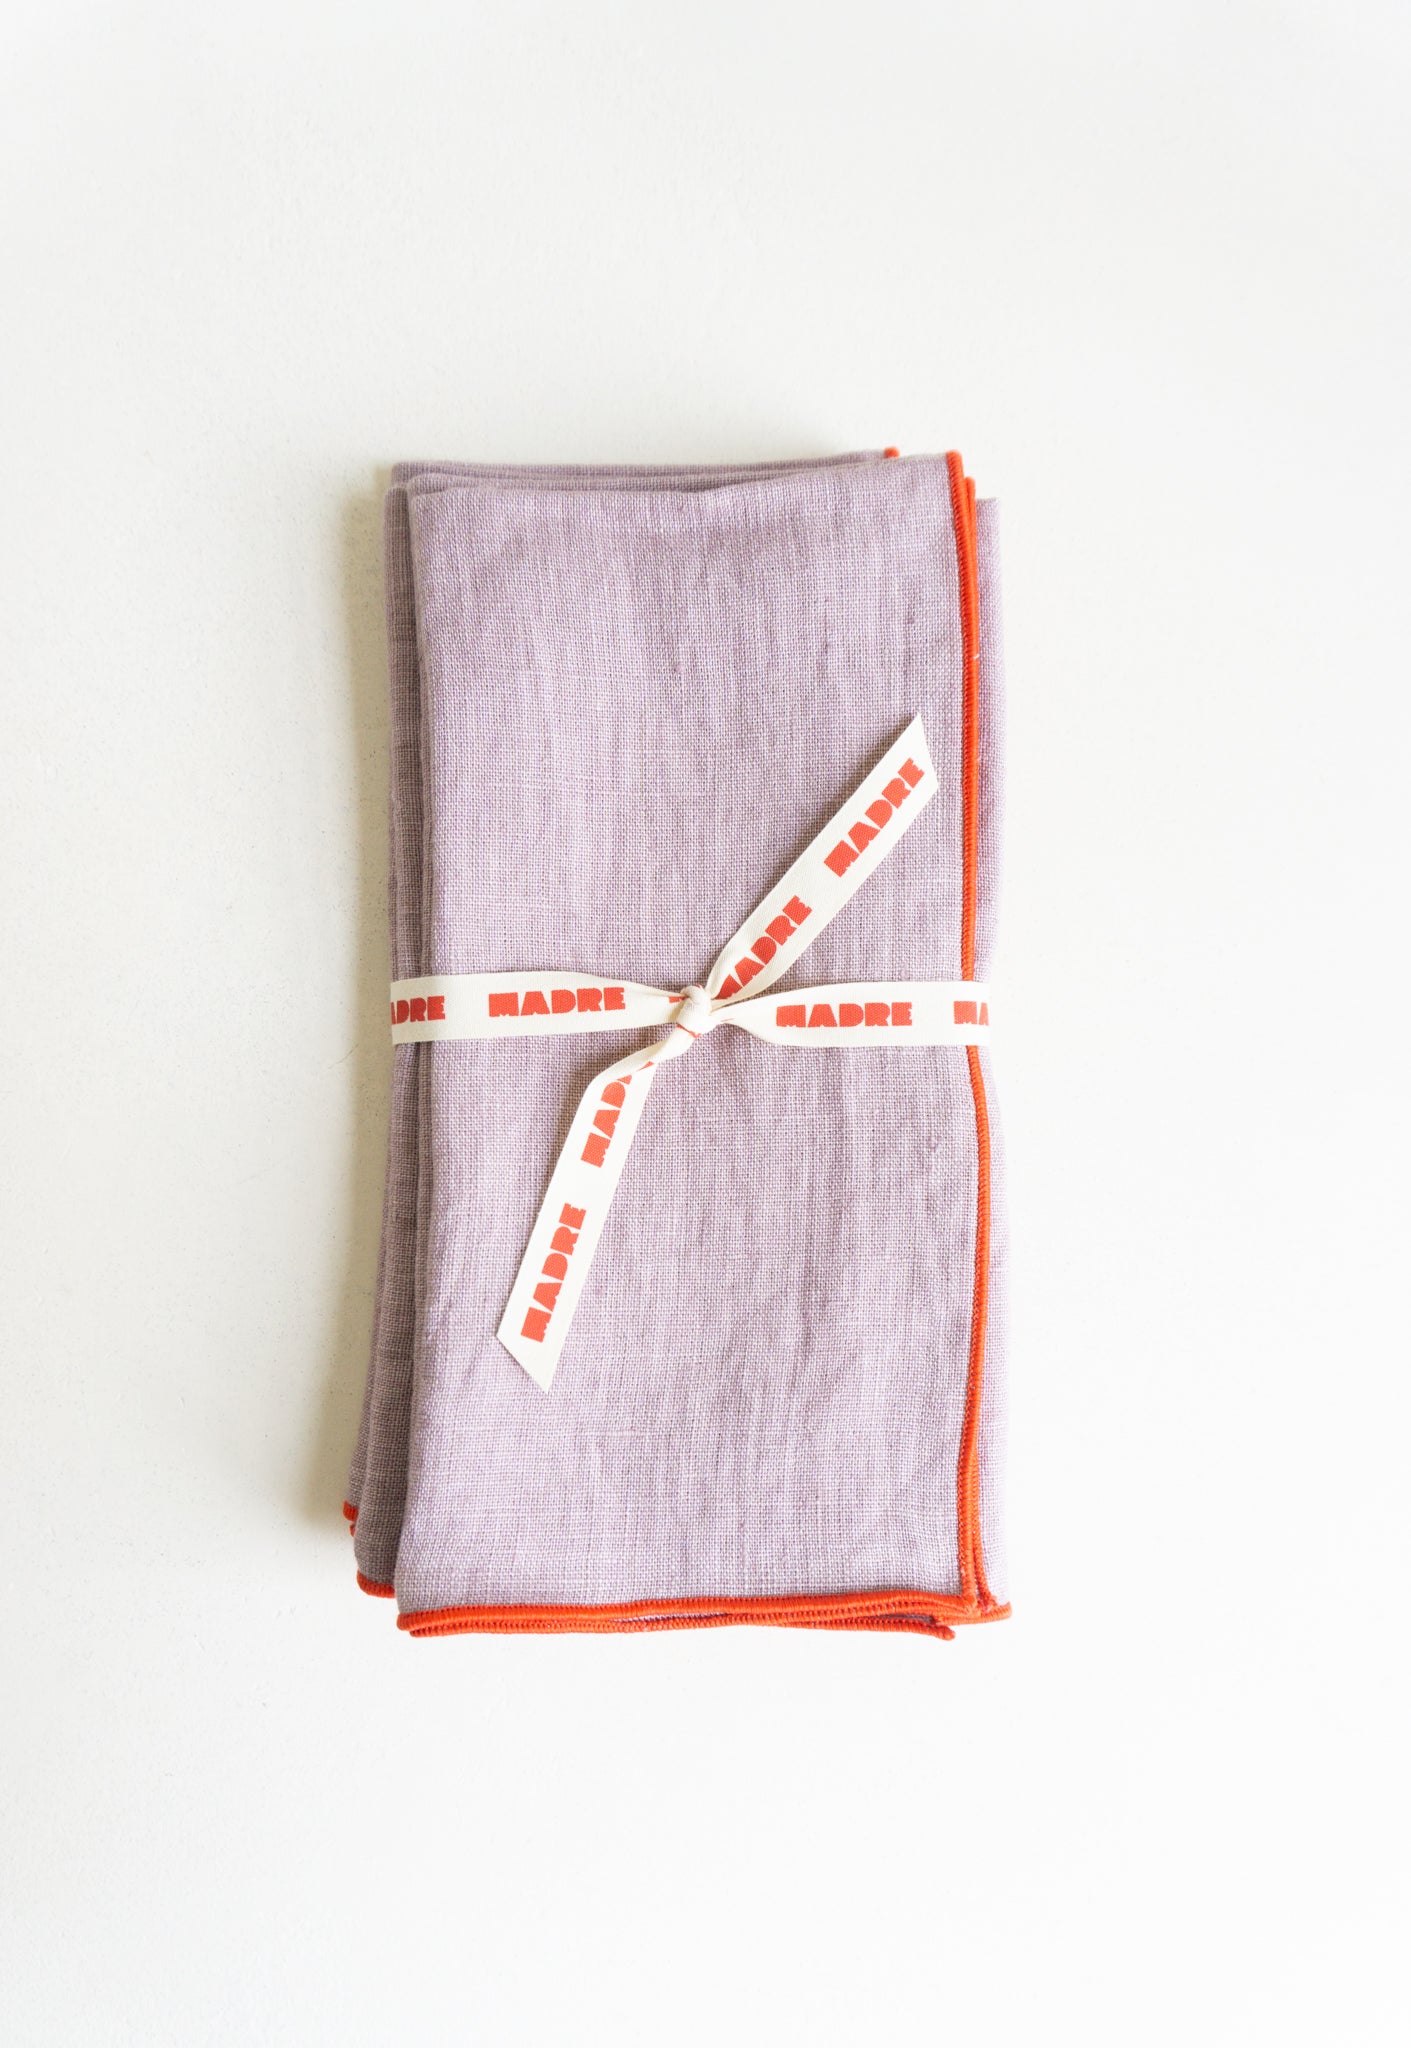 Madre Linen Napkin Set // Set of 4 – VESTIGE